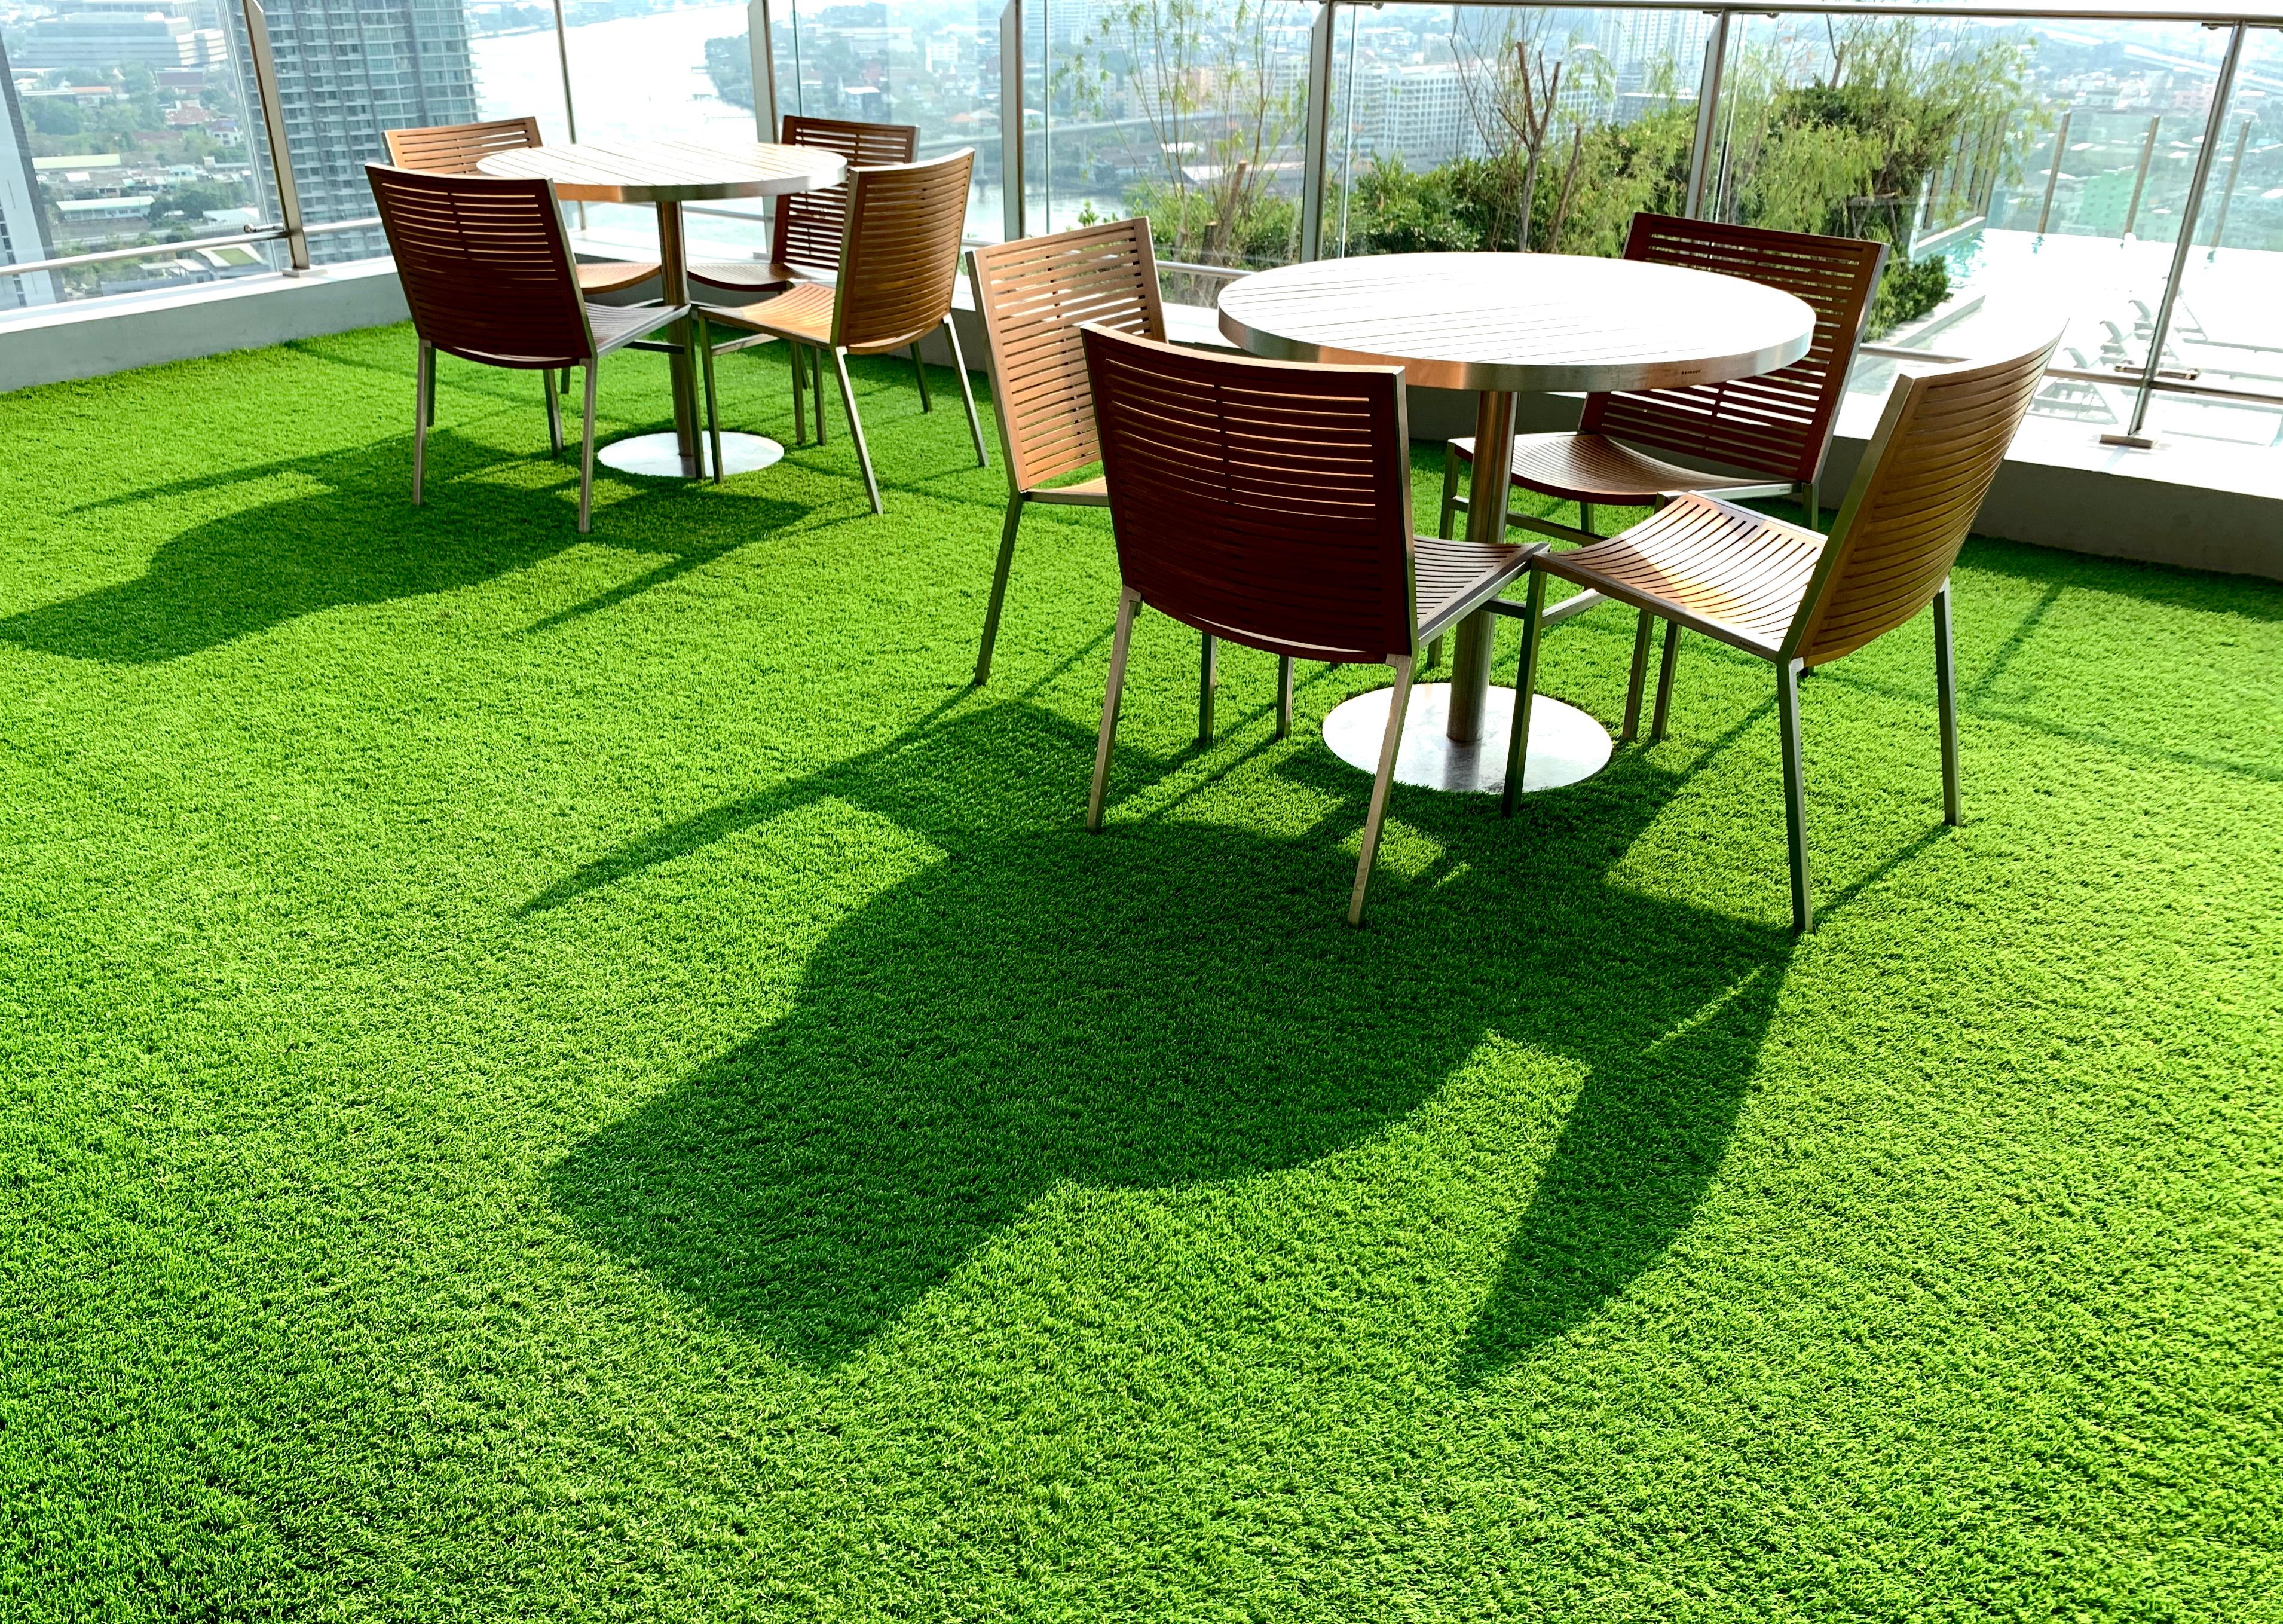 Incorporating Artificial Grass Into Interior Design